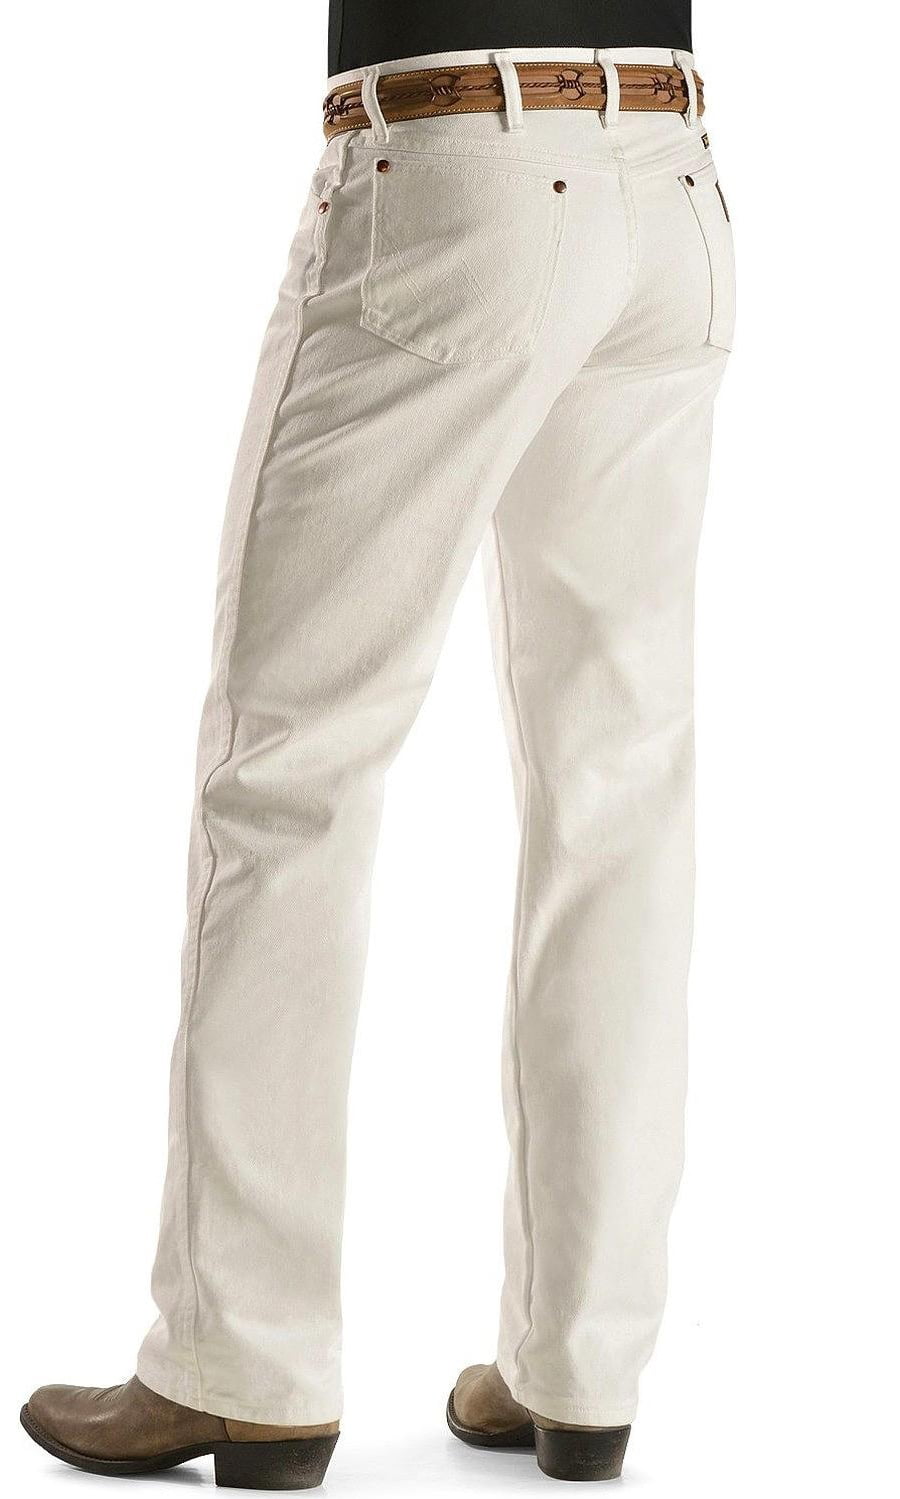 wrangler men's cowboy cut original fit jean, white, 36x36 